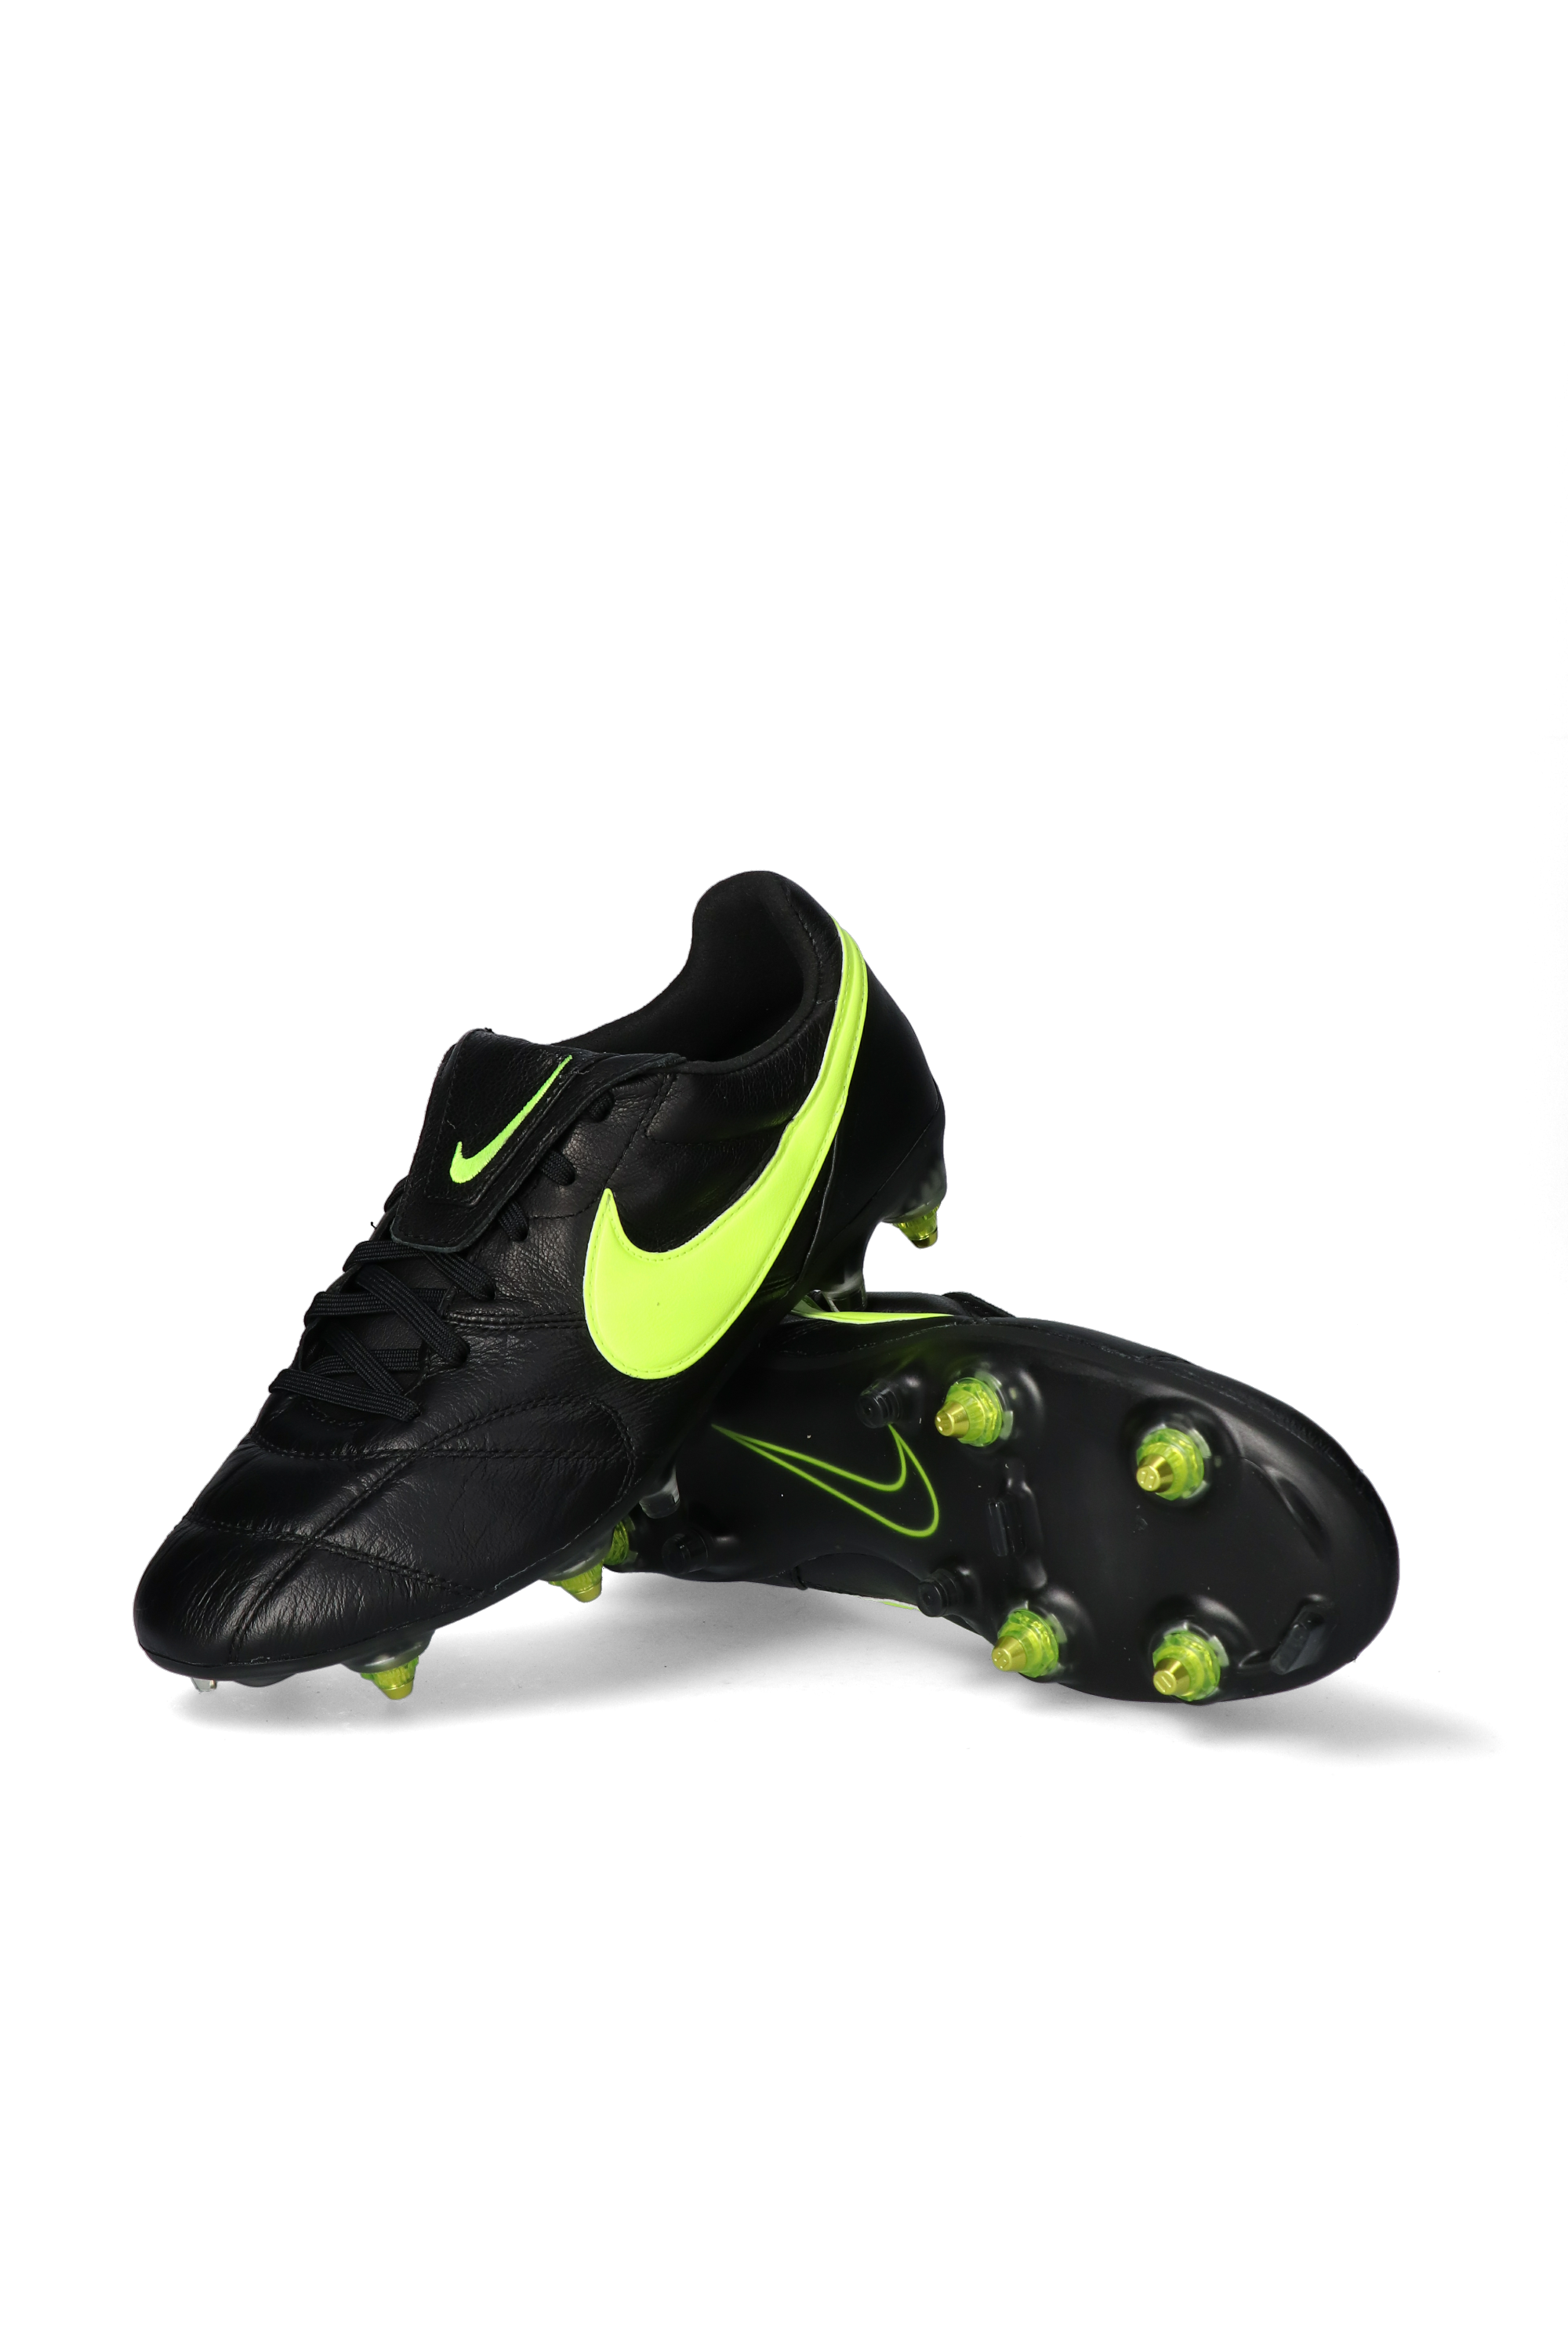 responsabilidad revisión Quinto Nike The Premier II SG-PRO AC | R-GOL.com - Football boots & equipment